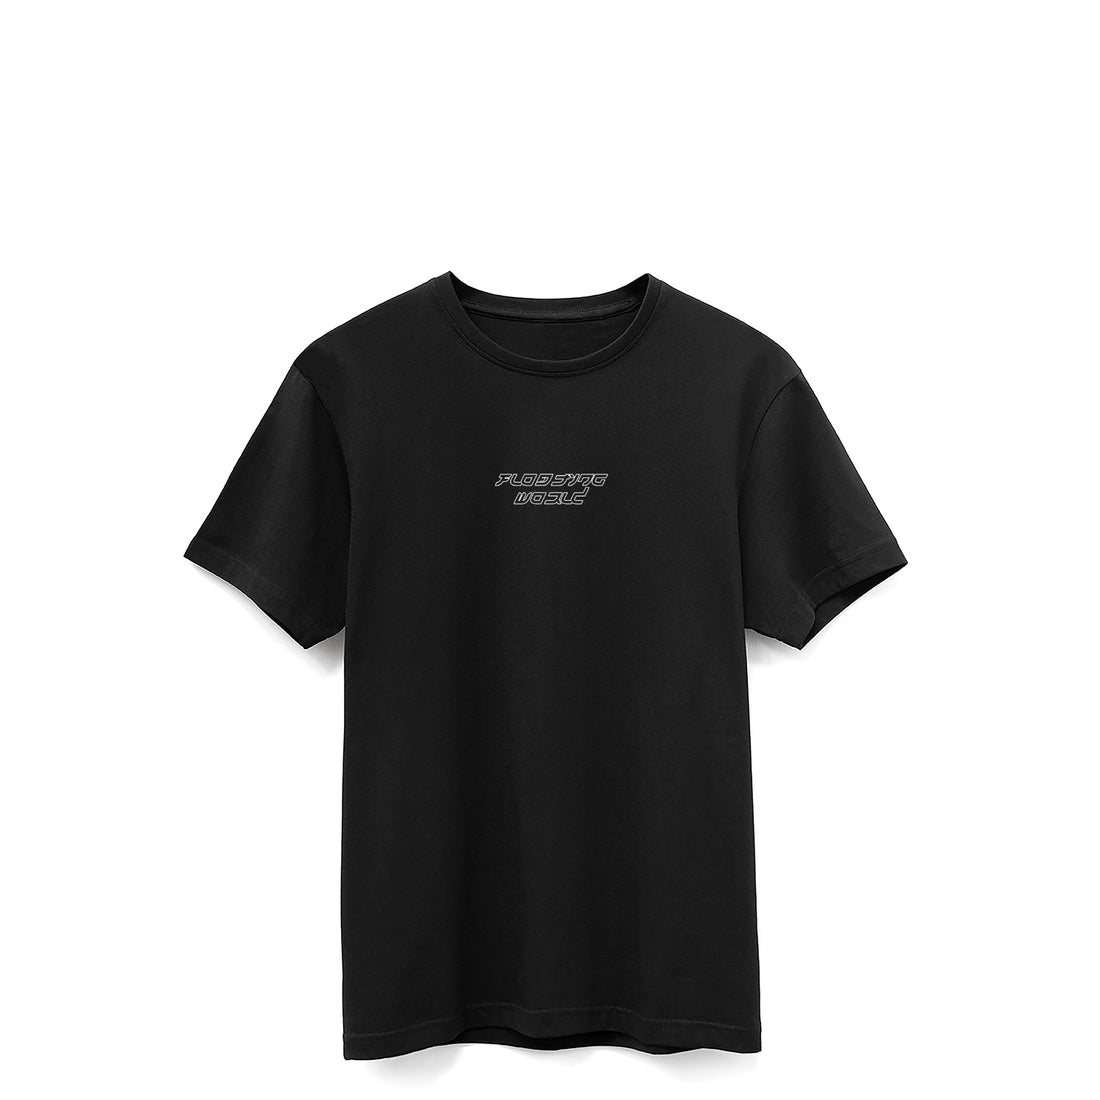 Unbeatable Quality Graphic T Shirt – Floating World Clothing